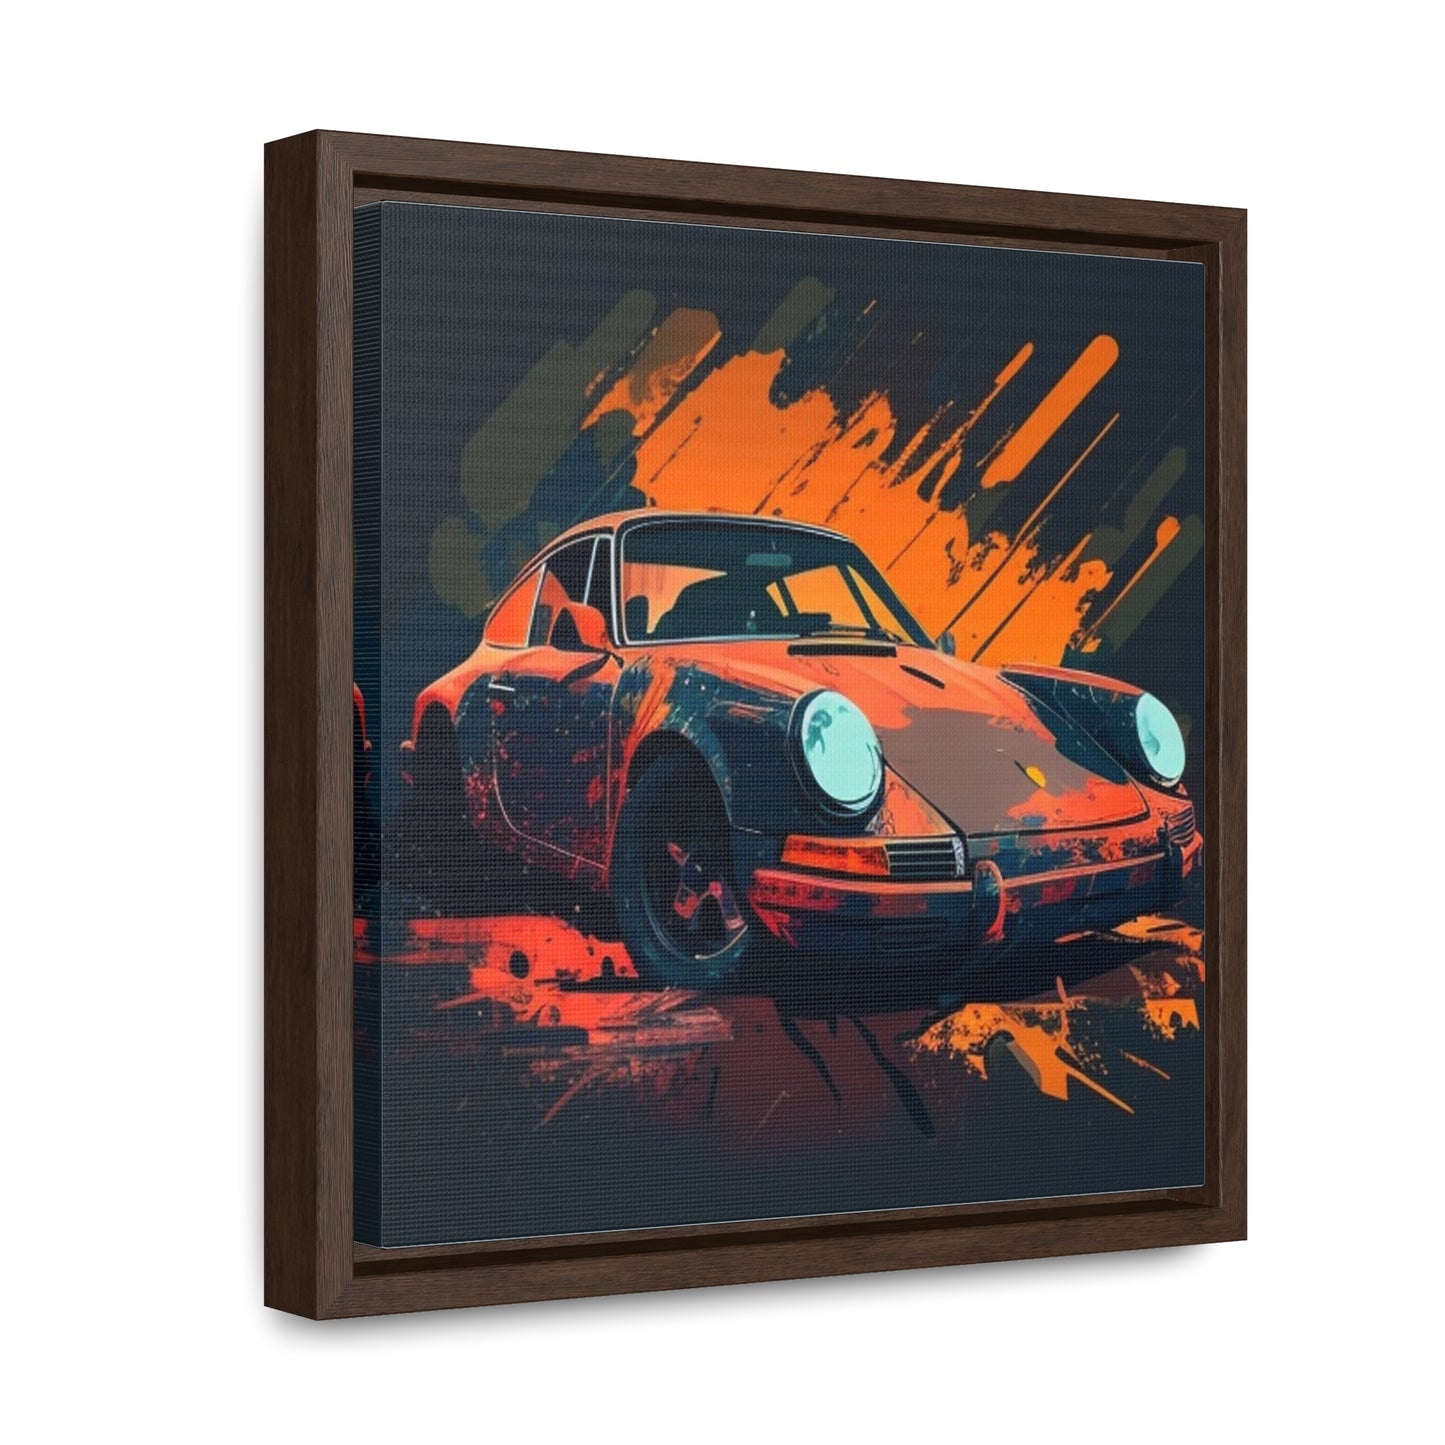 Gallery Canvas Wraps, Square Frame Porsche Abstract 3